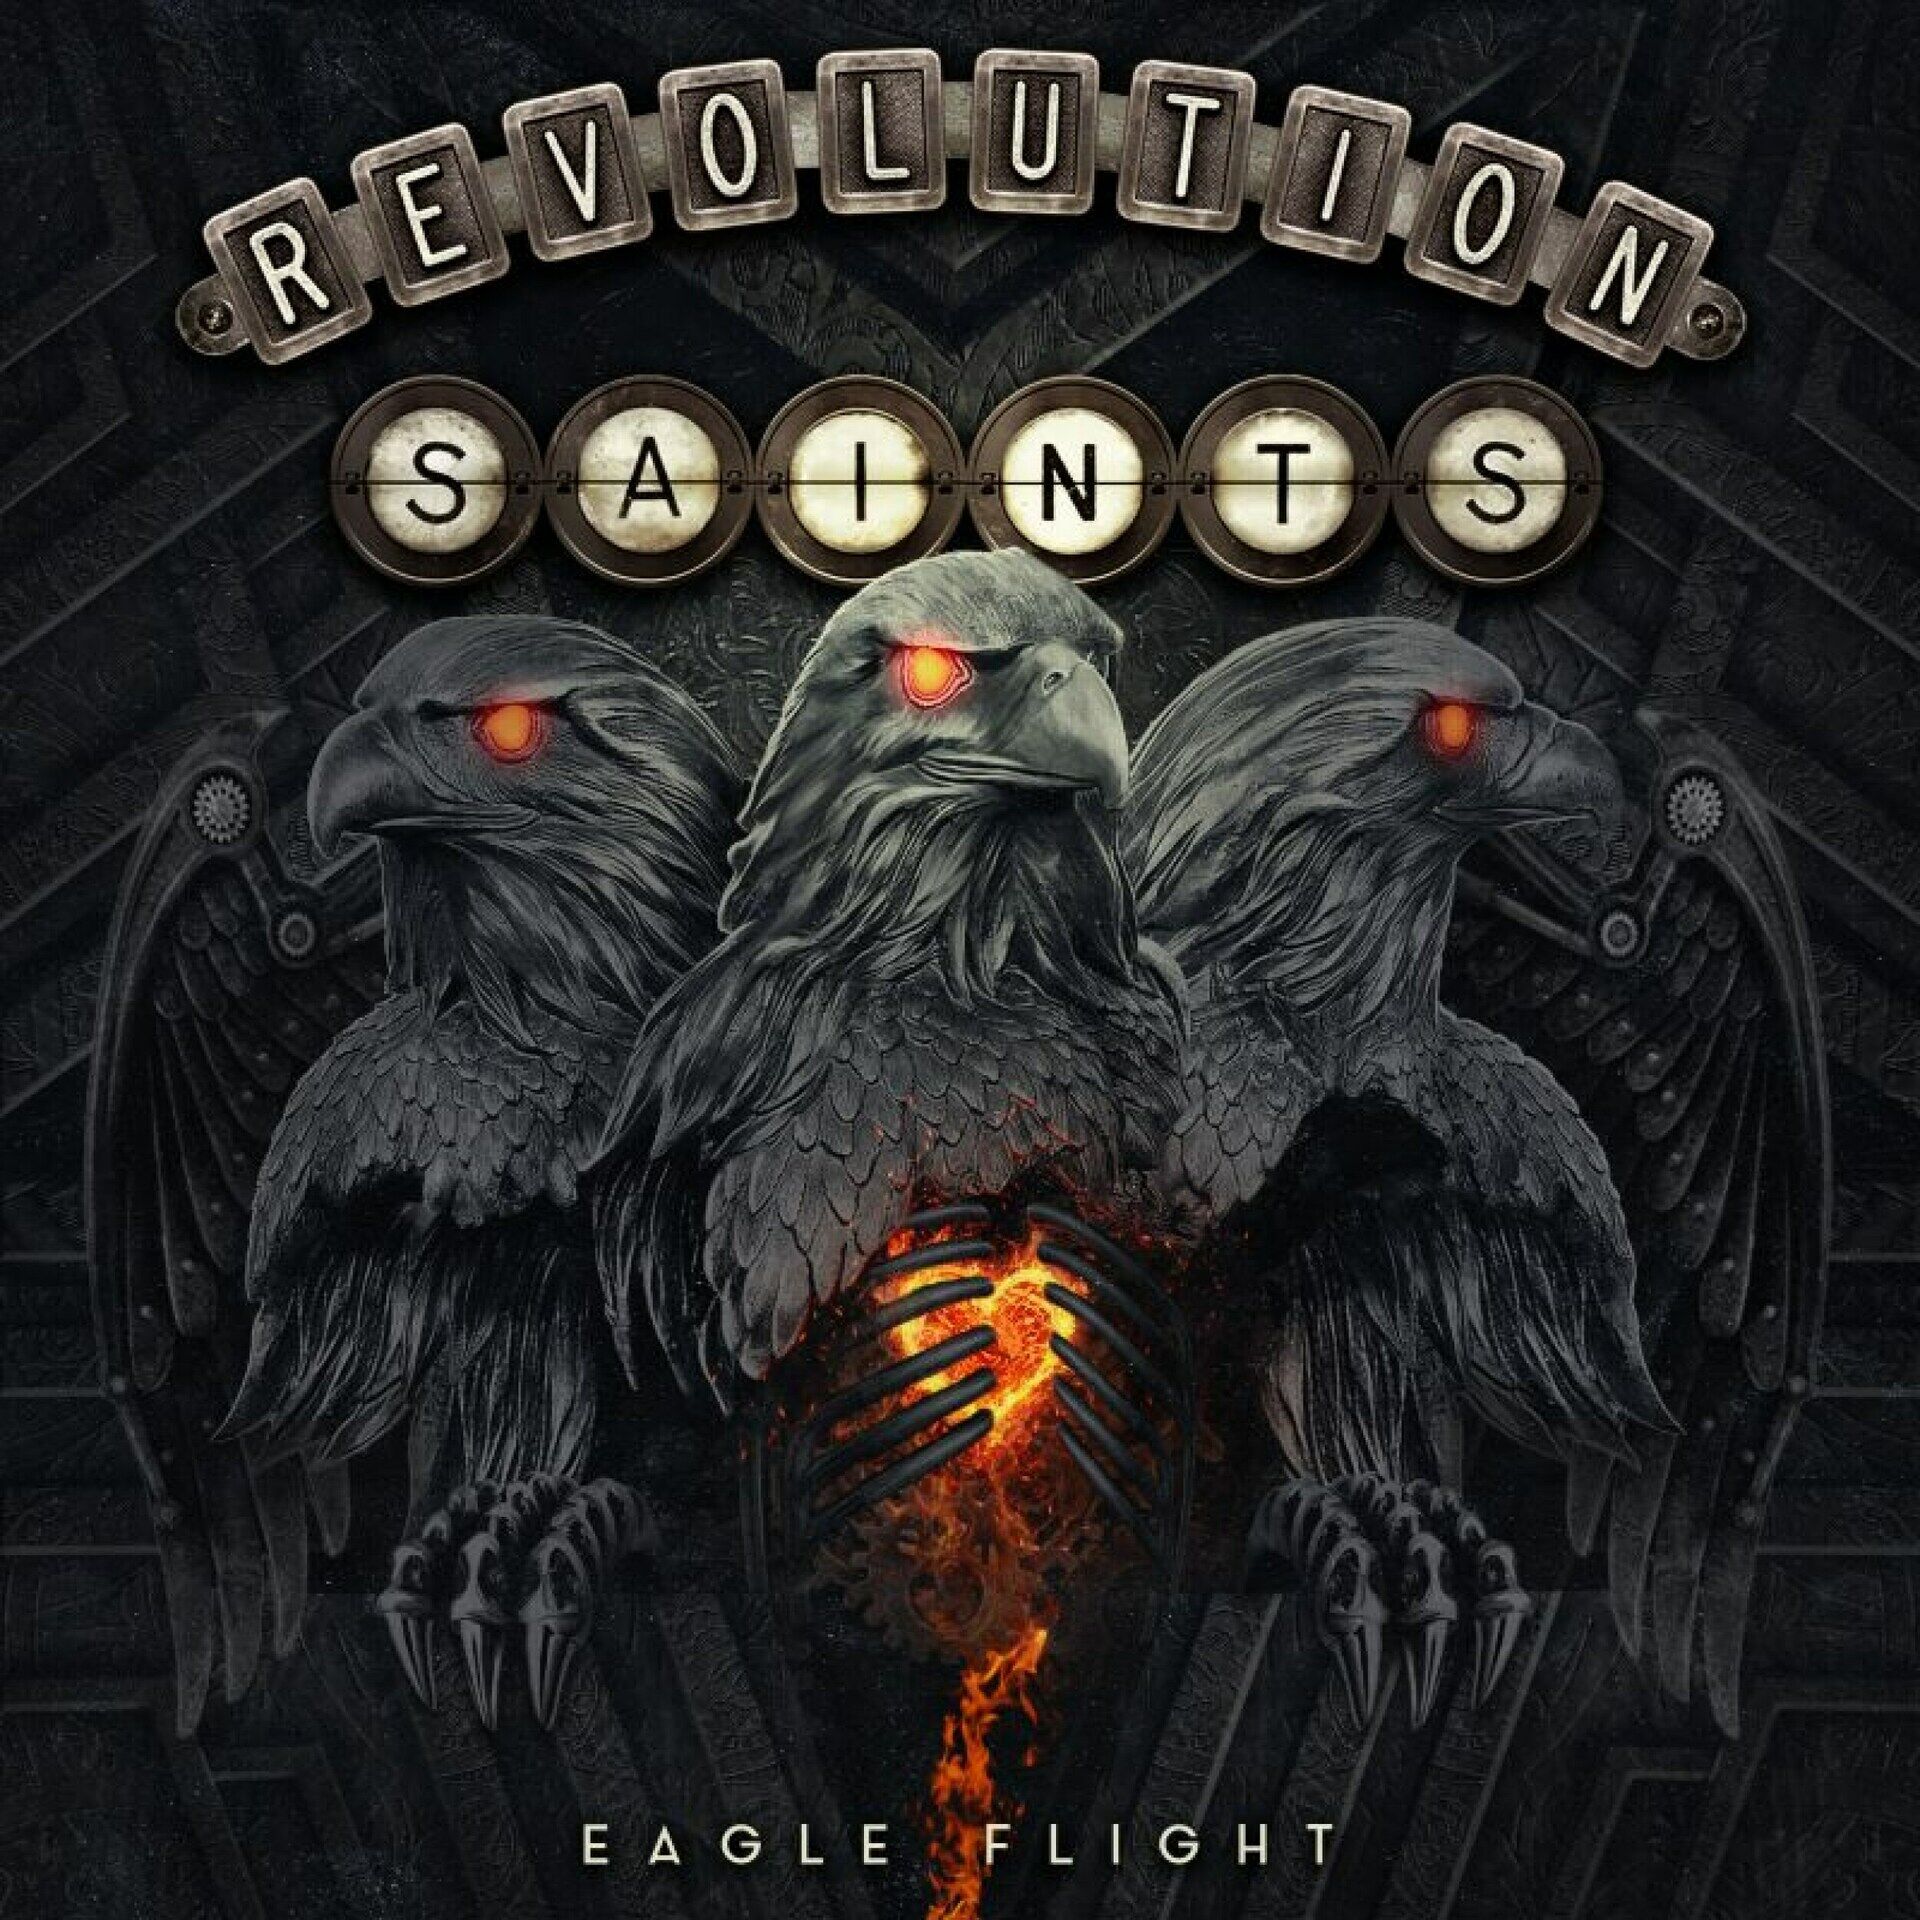 REVOLUTION SAINTS - Eagle Flight [BLACK LP]